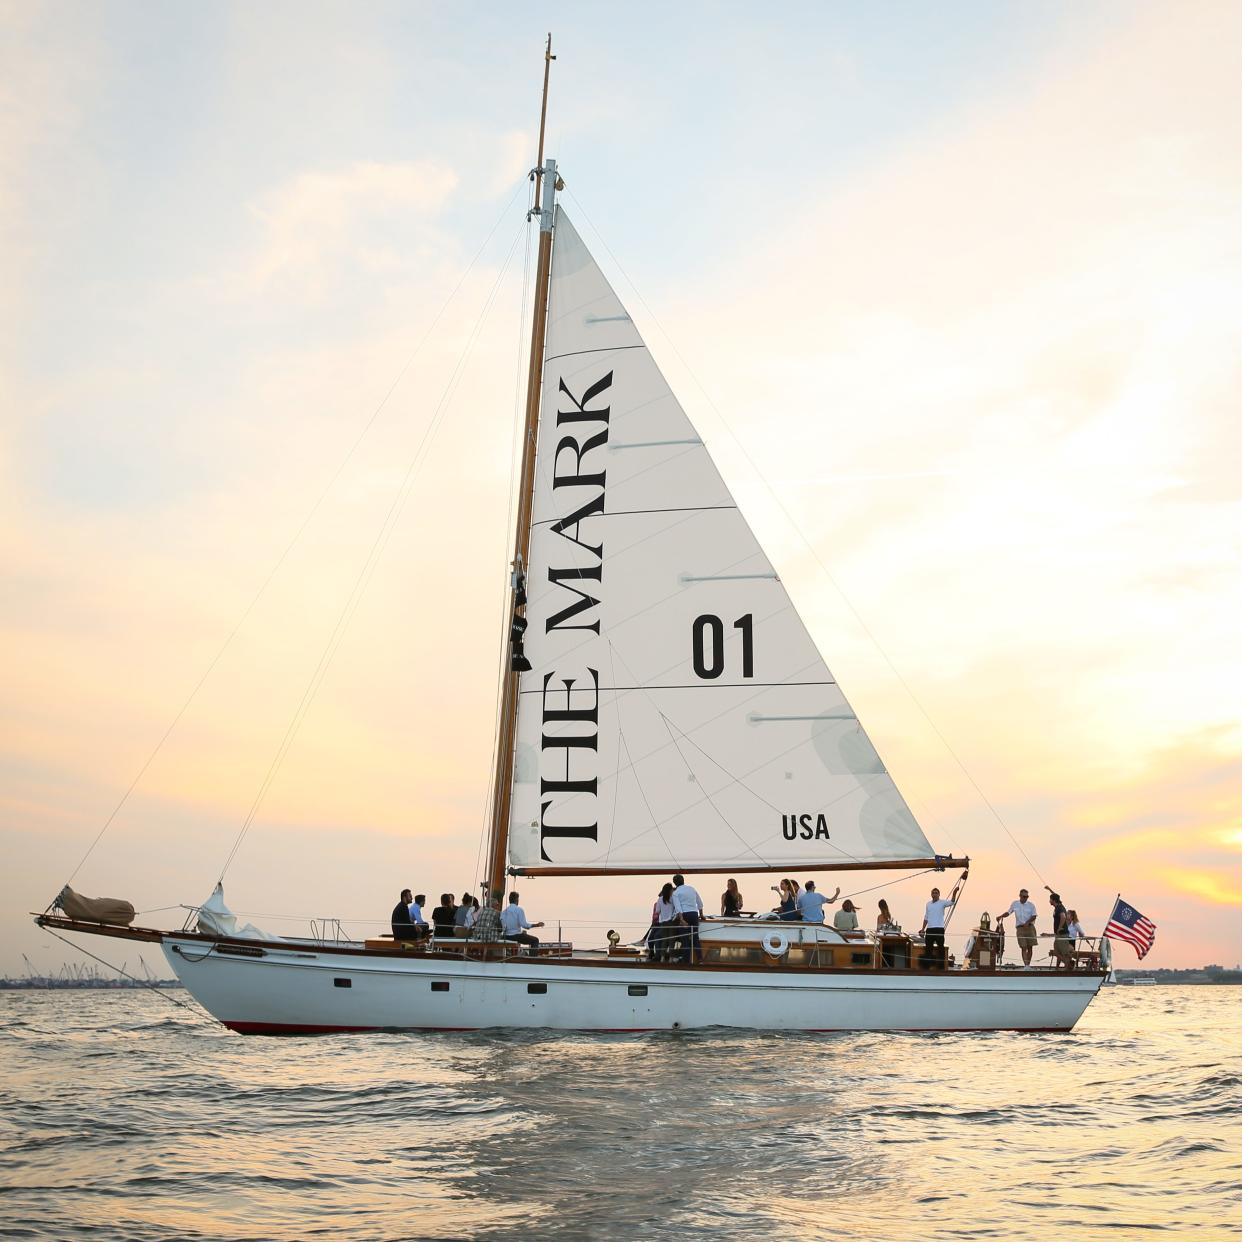 The Mark Hotel's sailboat will soon be setting sail for the season from Tribeca's North Cove Marina - Angela Pham